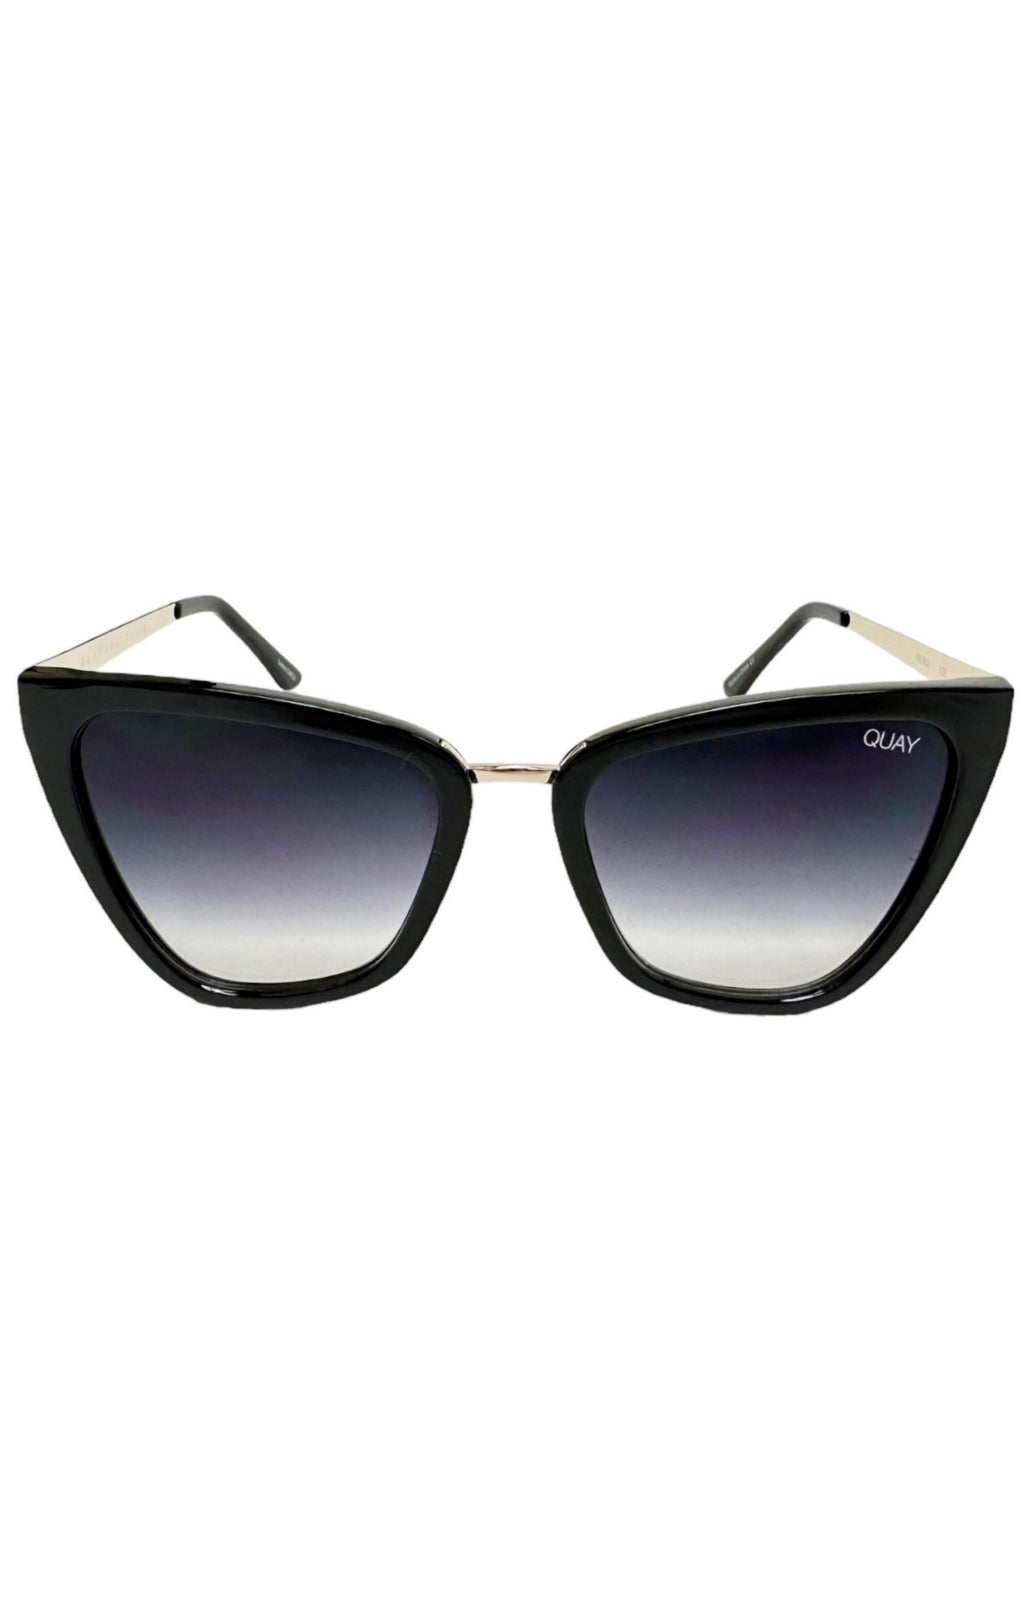 QUAY (NEW) Sunglasses Size: 6" x 2.125"